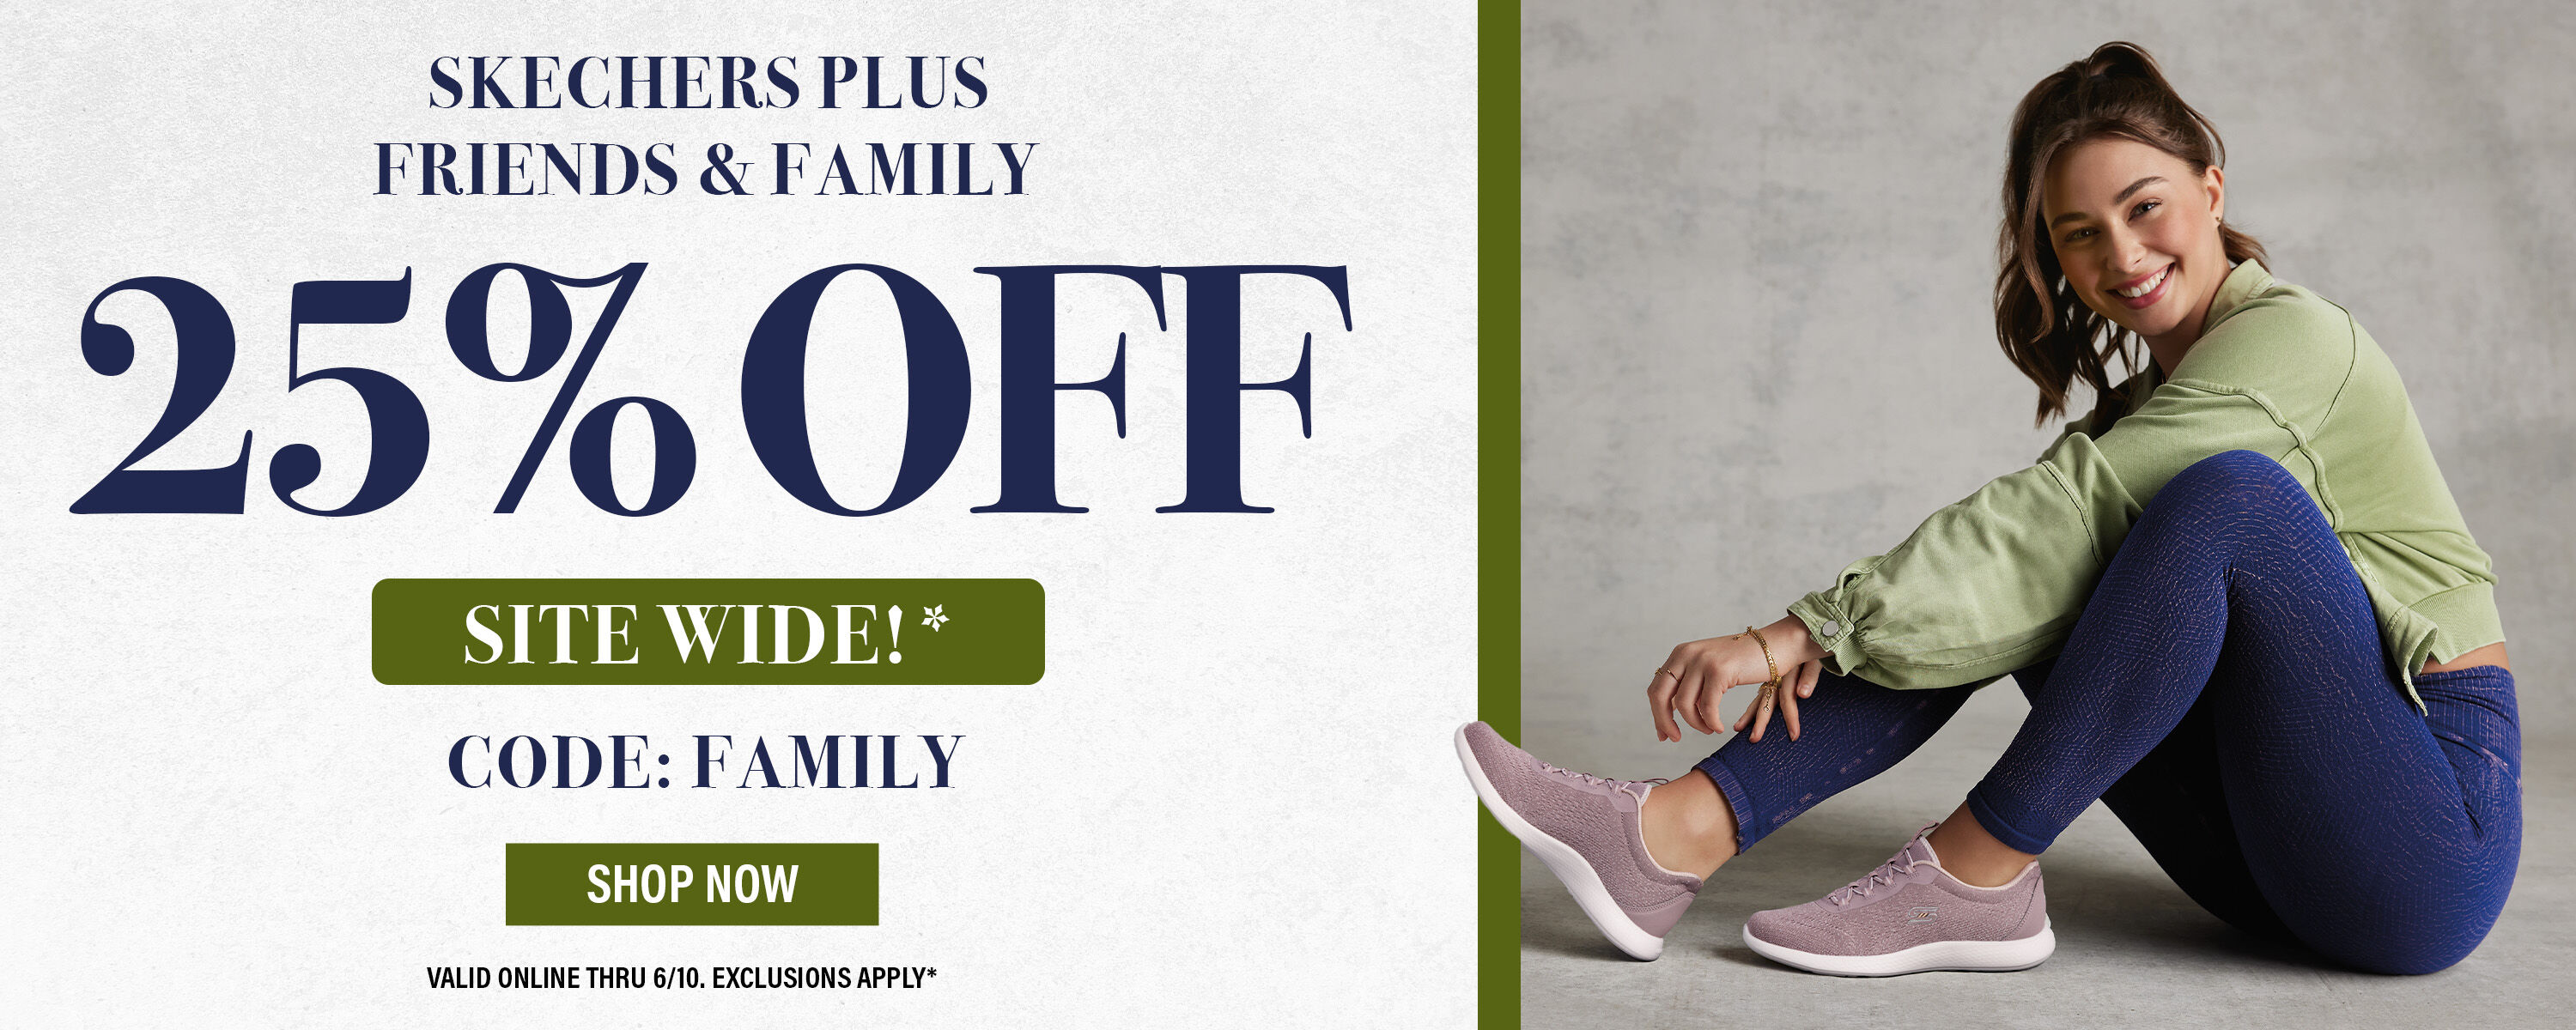 Skechers Plus Friends & Family 25% off Sitewide Sale - SHOP NOW